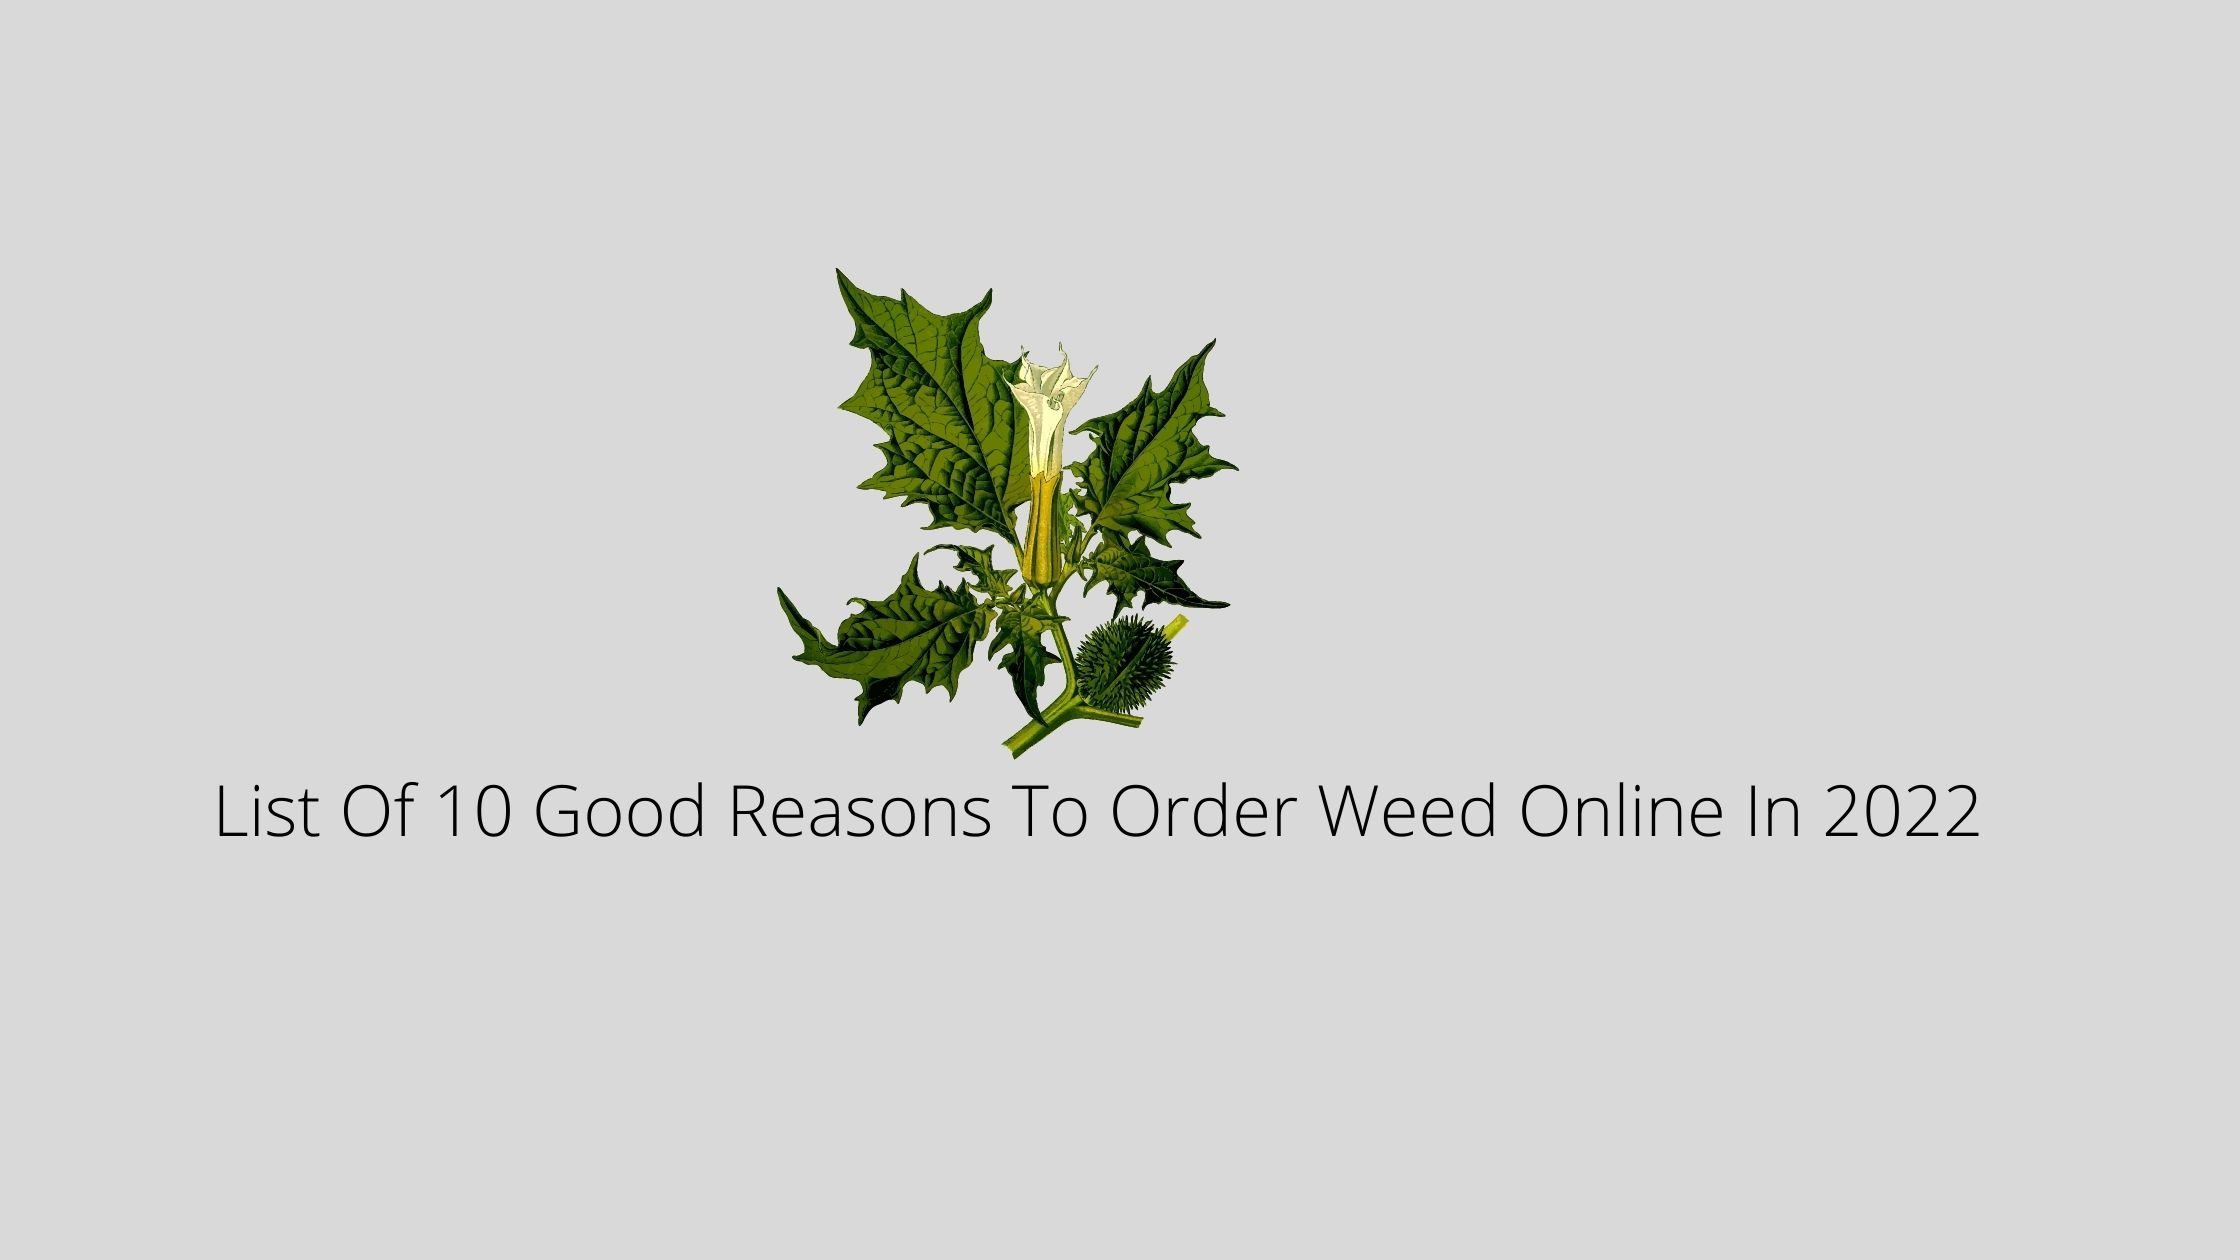 List Of 10 Good Reasons To Order Weed Online In 2022